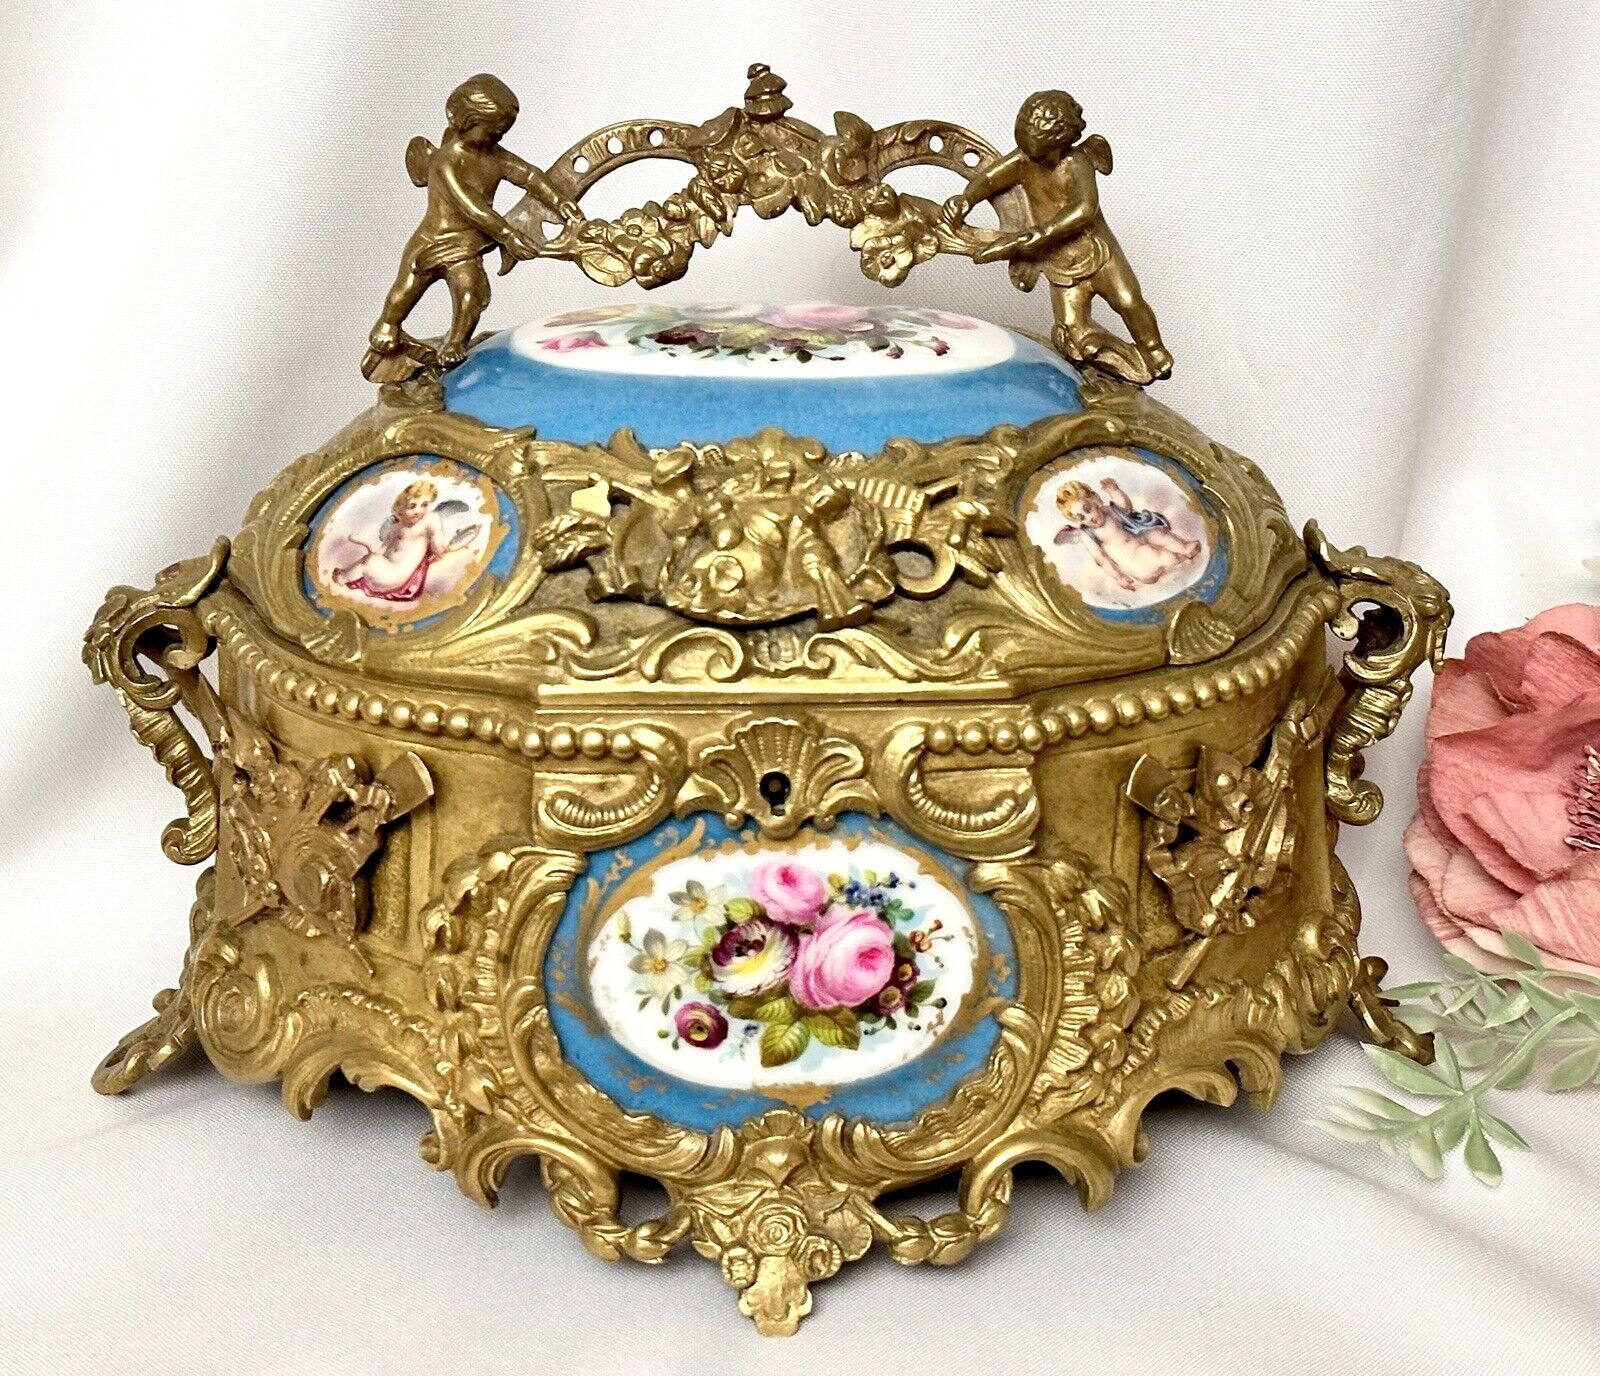 LG Antique French Serves Louis XV Styled Cherub Bronze Porcelain Jewelry Casket